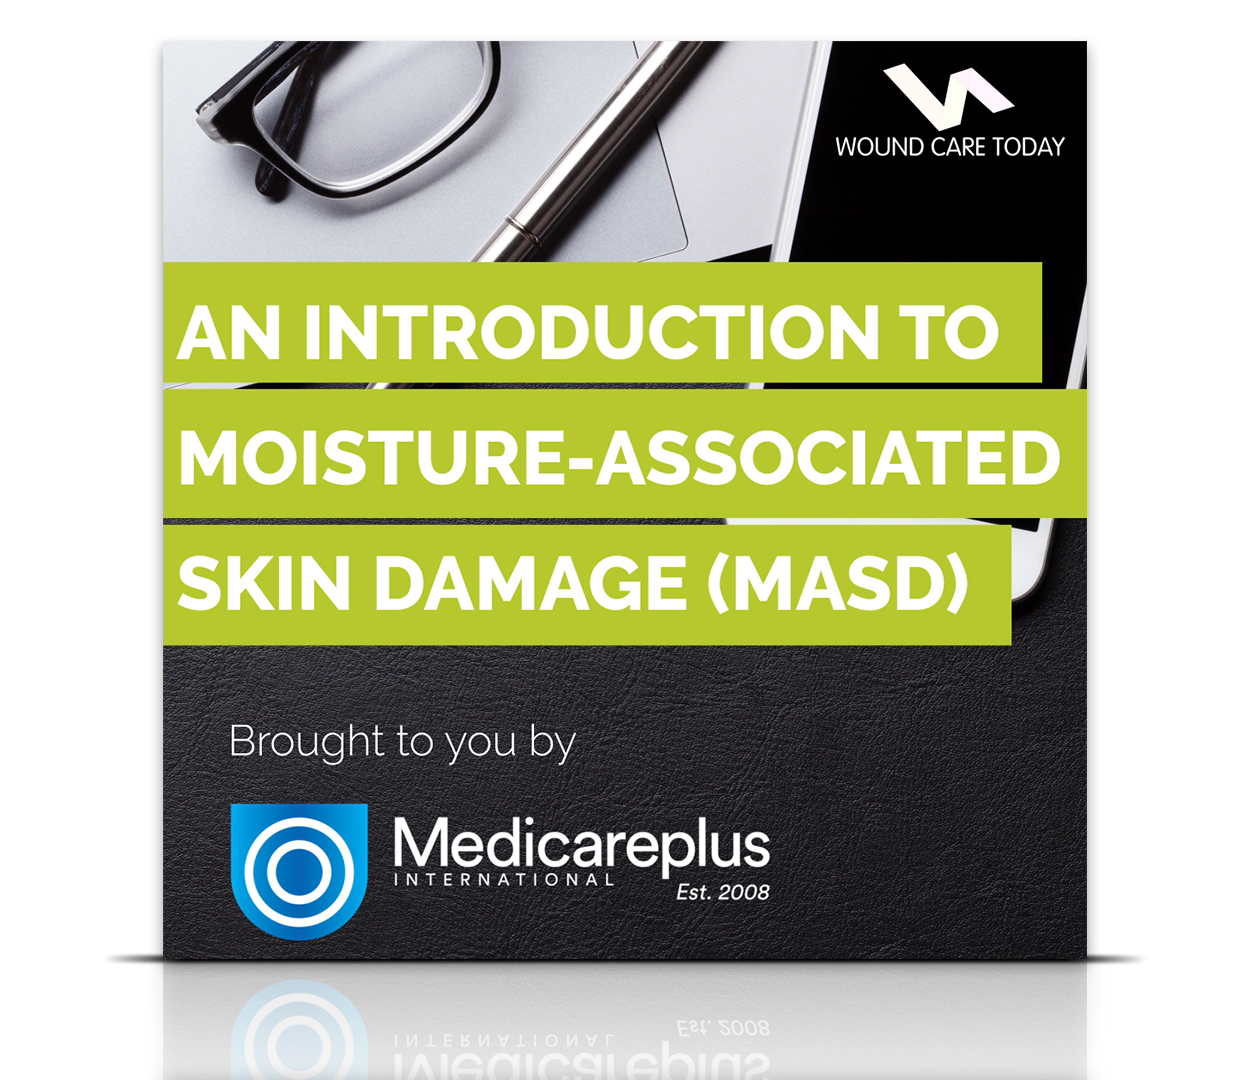 An Introduction to moisture-associated skin damage (MASD)